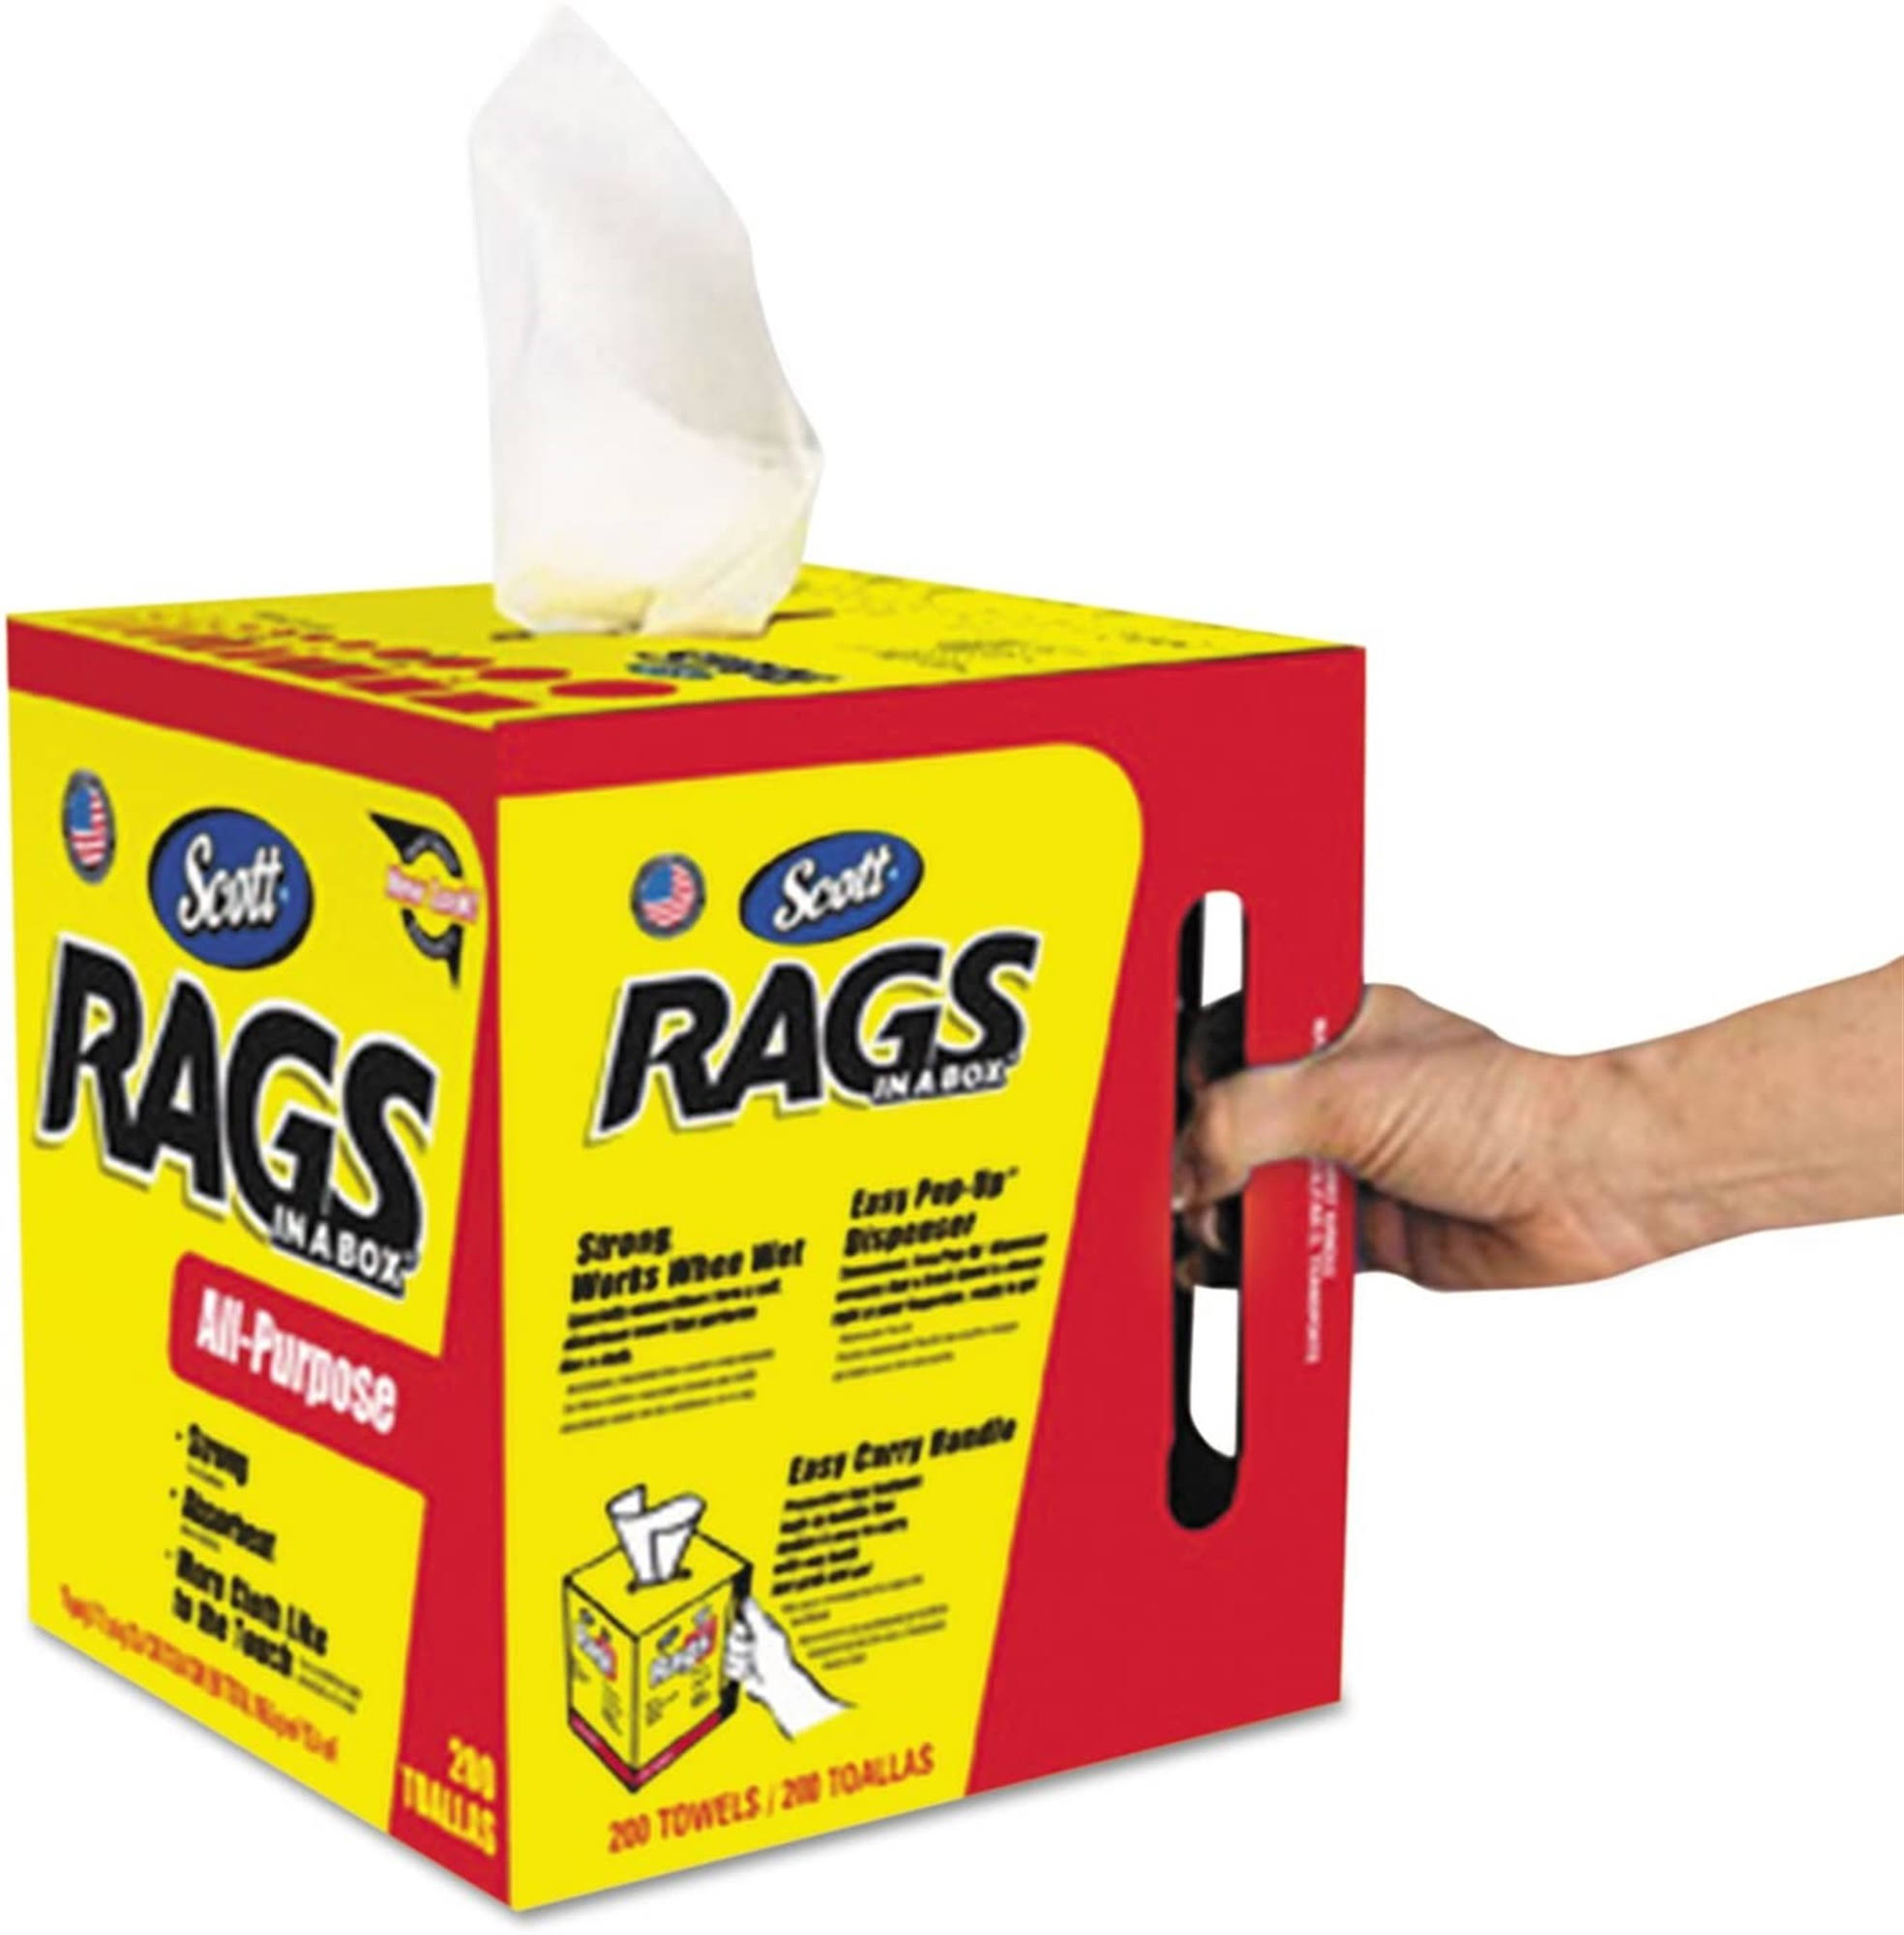 Scott Rags In A Box - White, 200 Towels